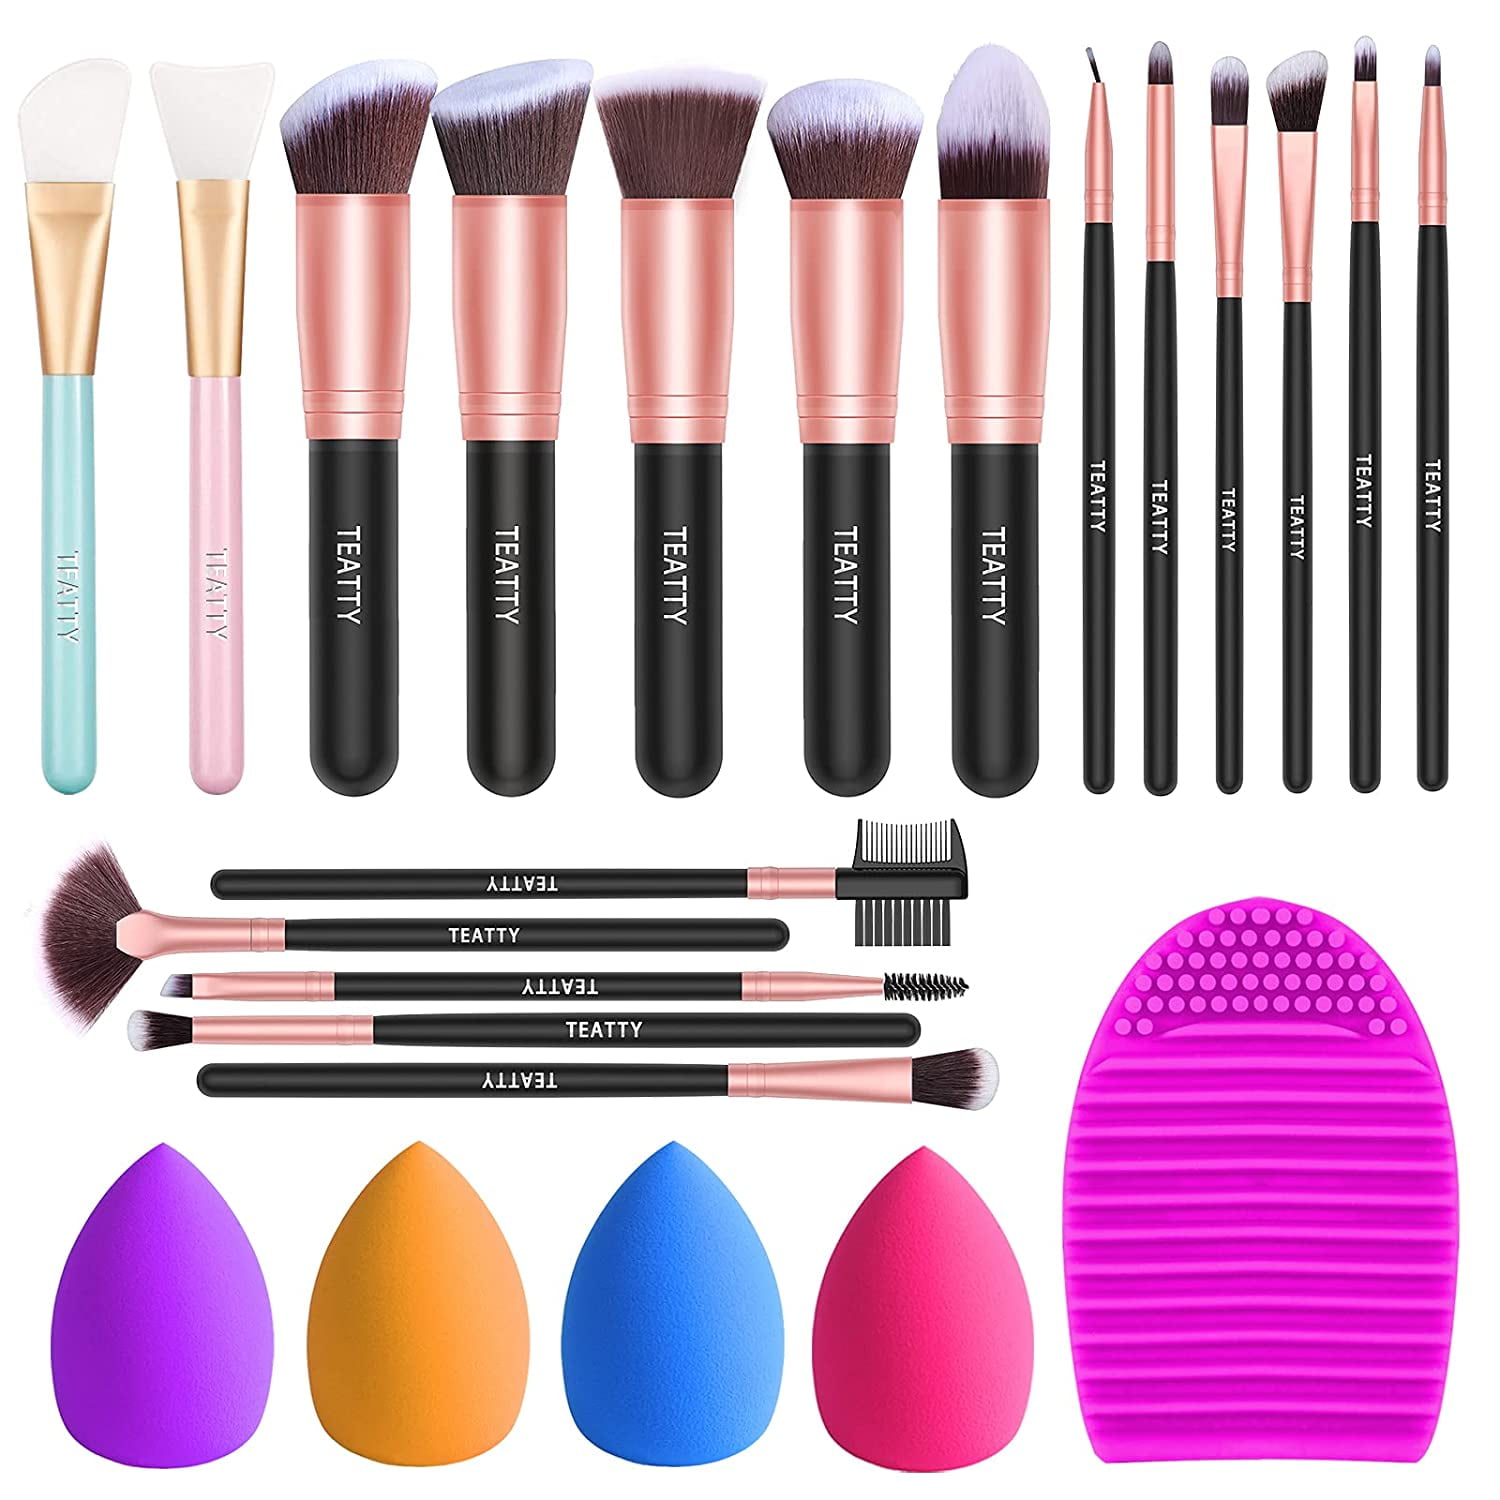 Synthetic Hair Makeup Brushes - Blending Make-up Brush Cosmetics Supplies  2pcs S